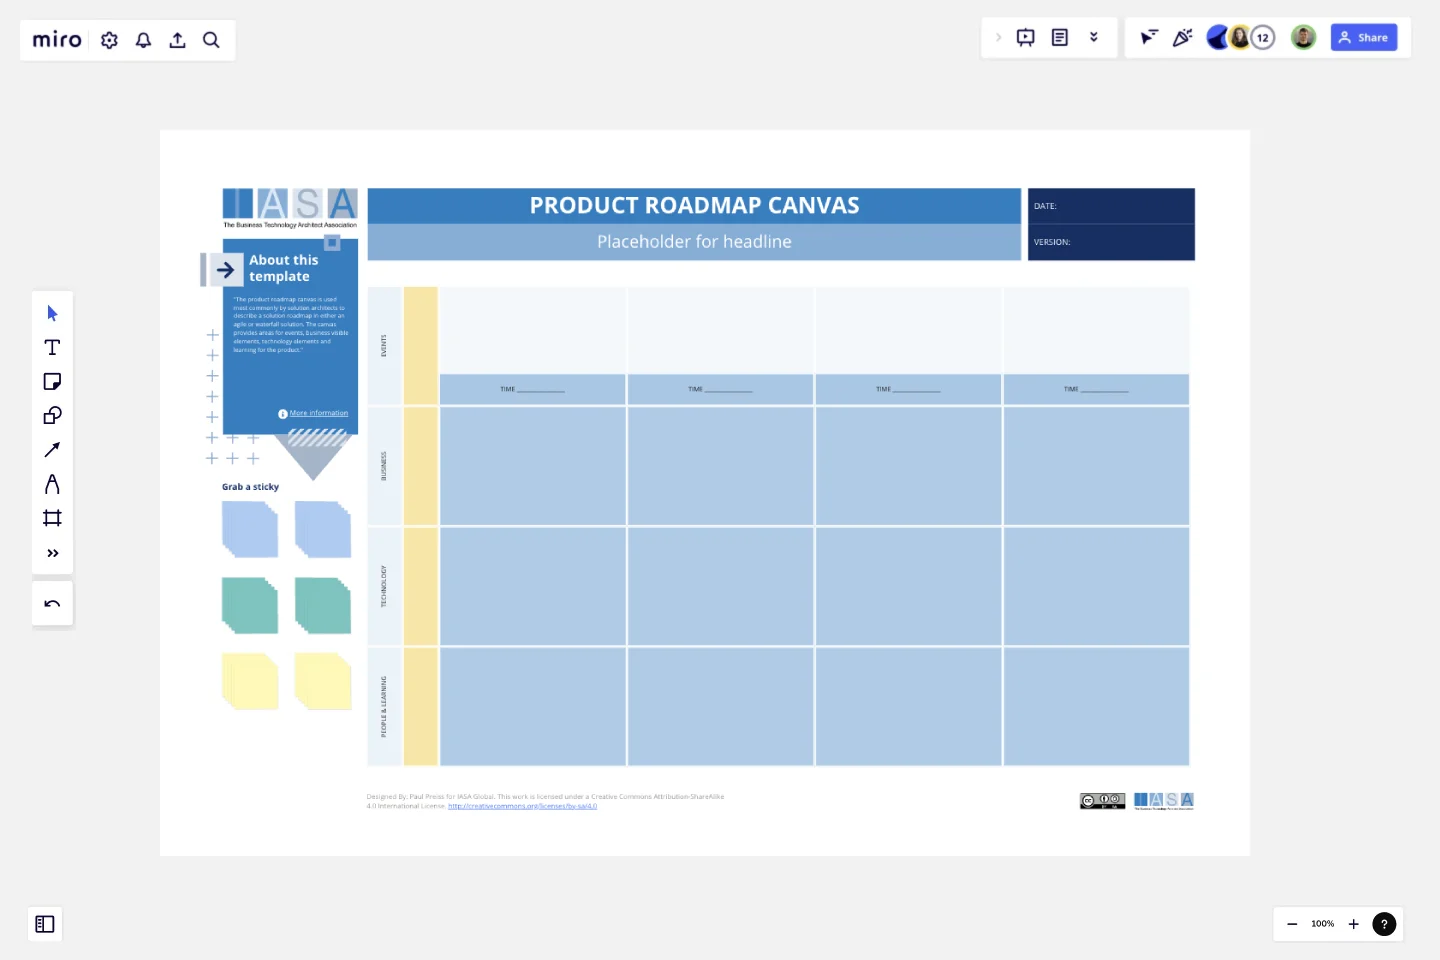 IASA - Product Roadmap Canvas template